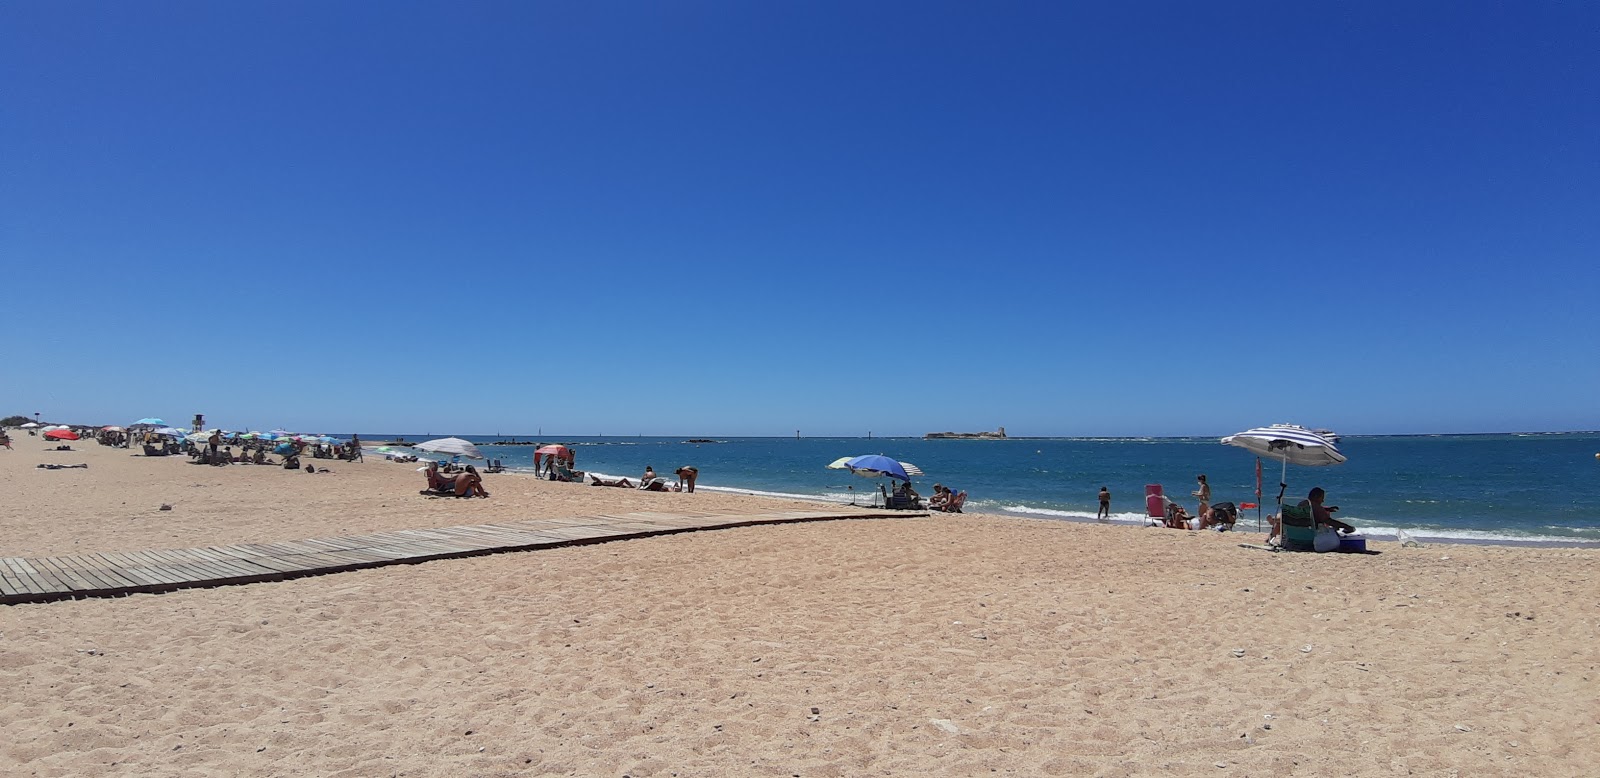 Foto di Playa de Sancti-Petri con una superficie del sabbia luminosa